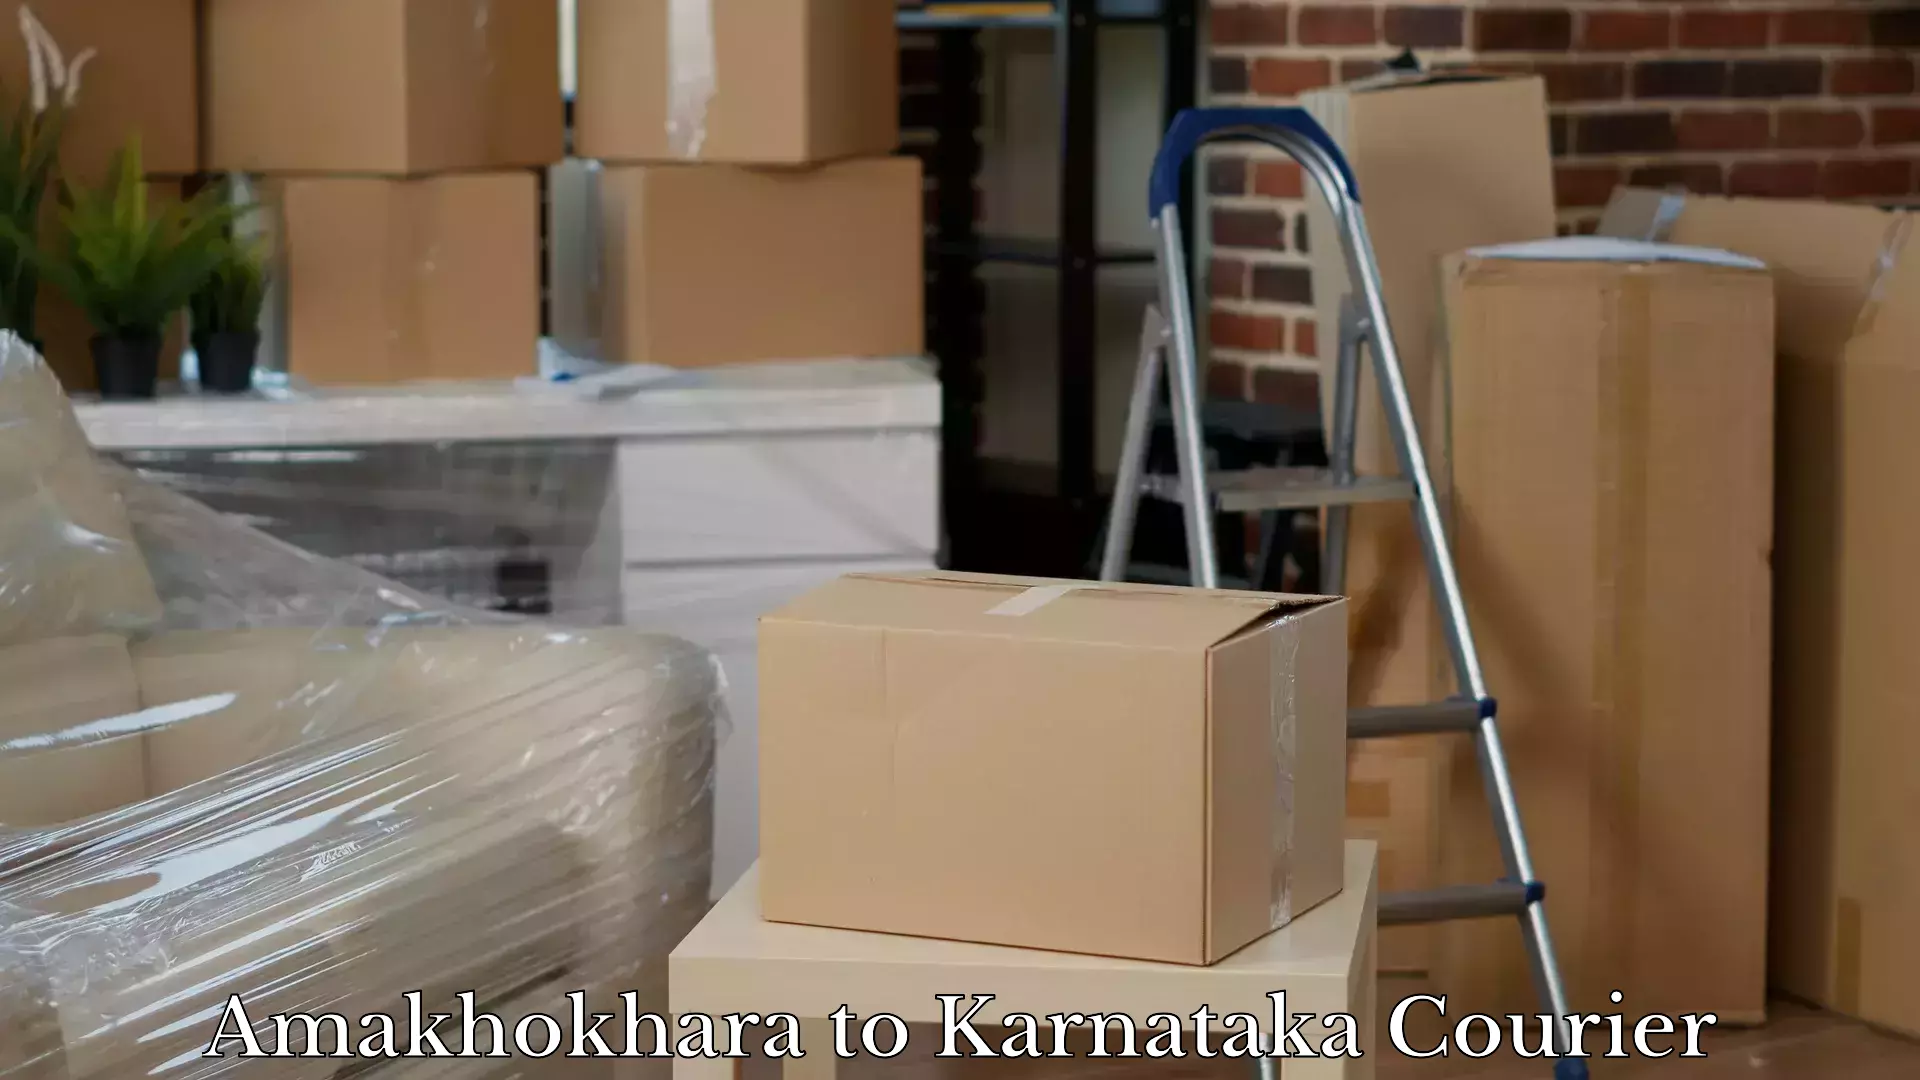 Door-to-door baggage service in Amakhokhara to Karnataka